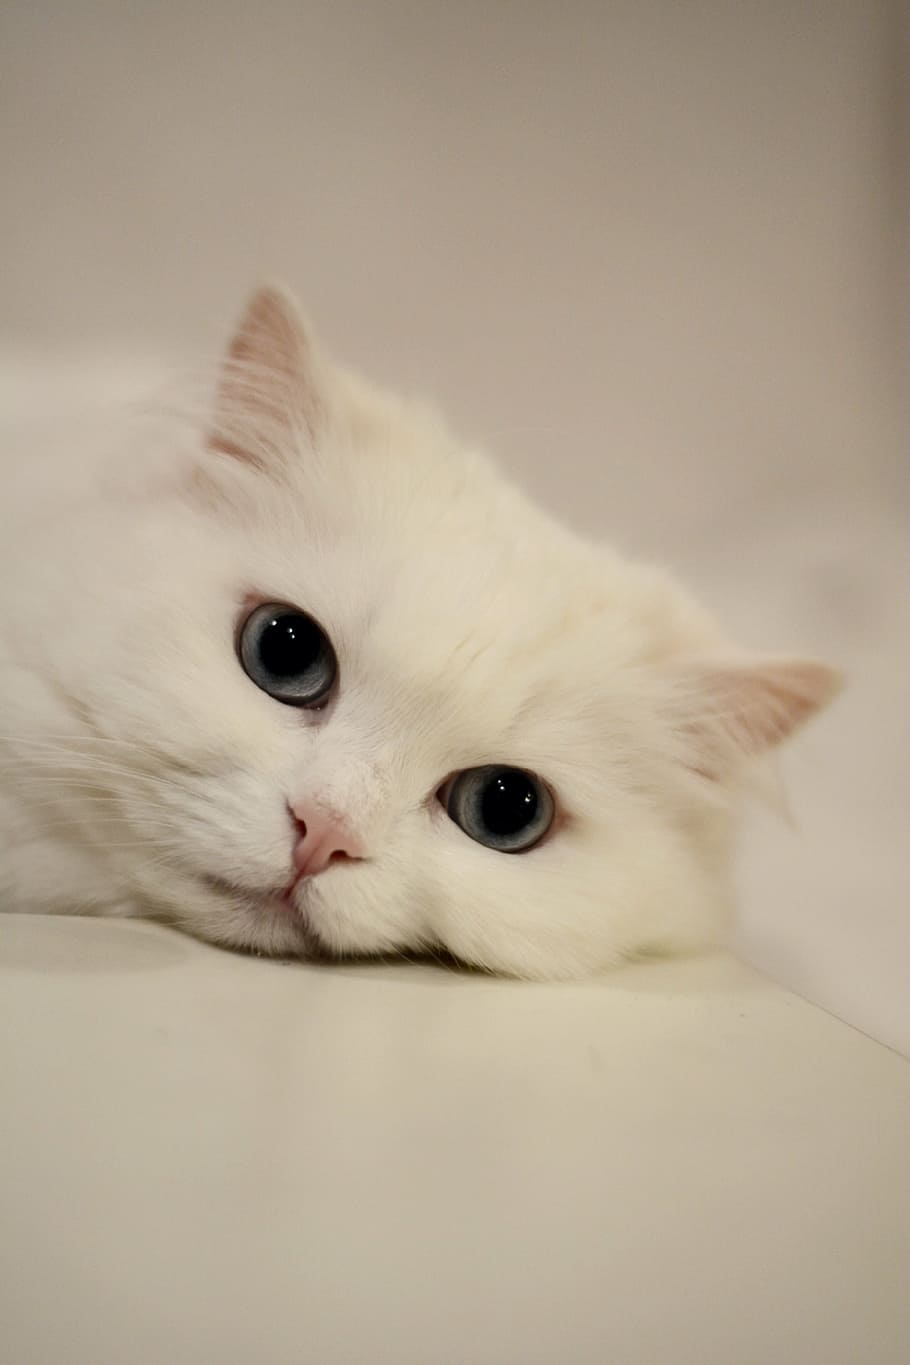 putih, kucing, permukaan, mata, mata kucing, kucing domestik, kucing tenang, hewan peliharaan, satu hewan, melihat kamera